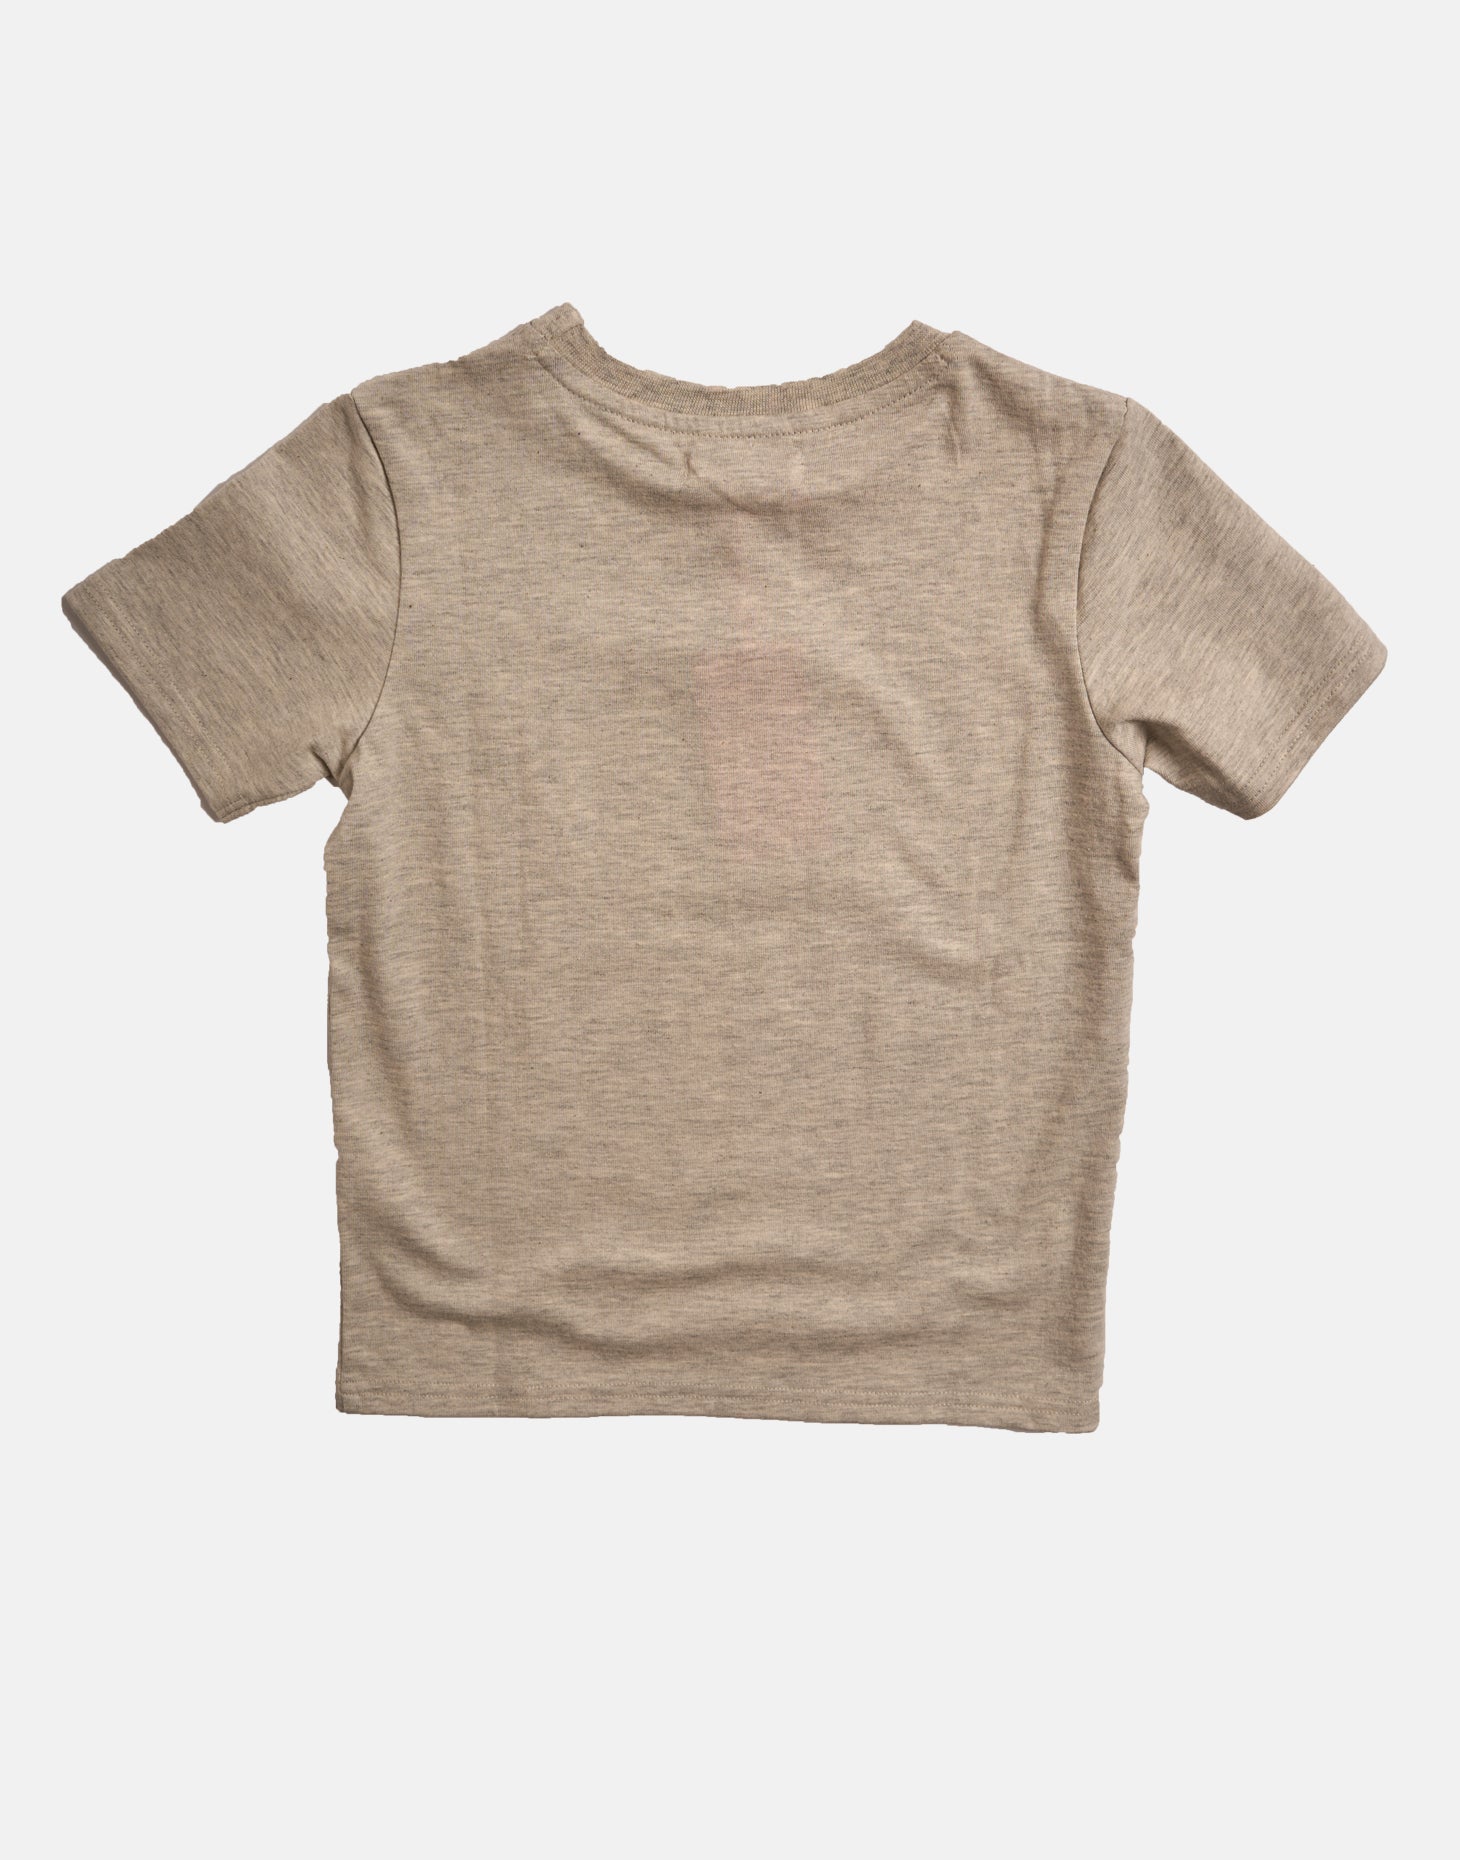 Boys Character Printed Grey Graphic T-Shirt